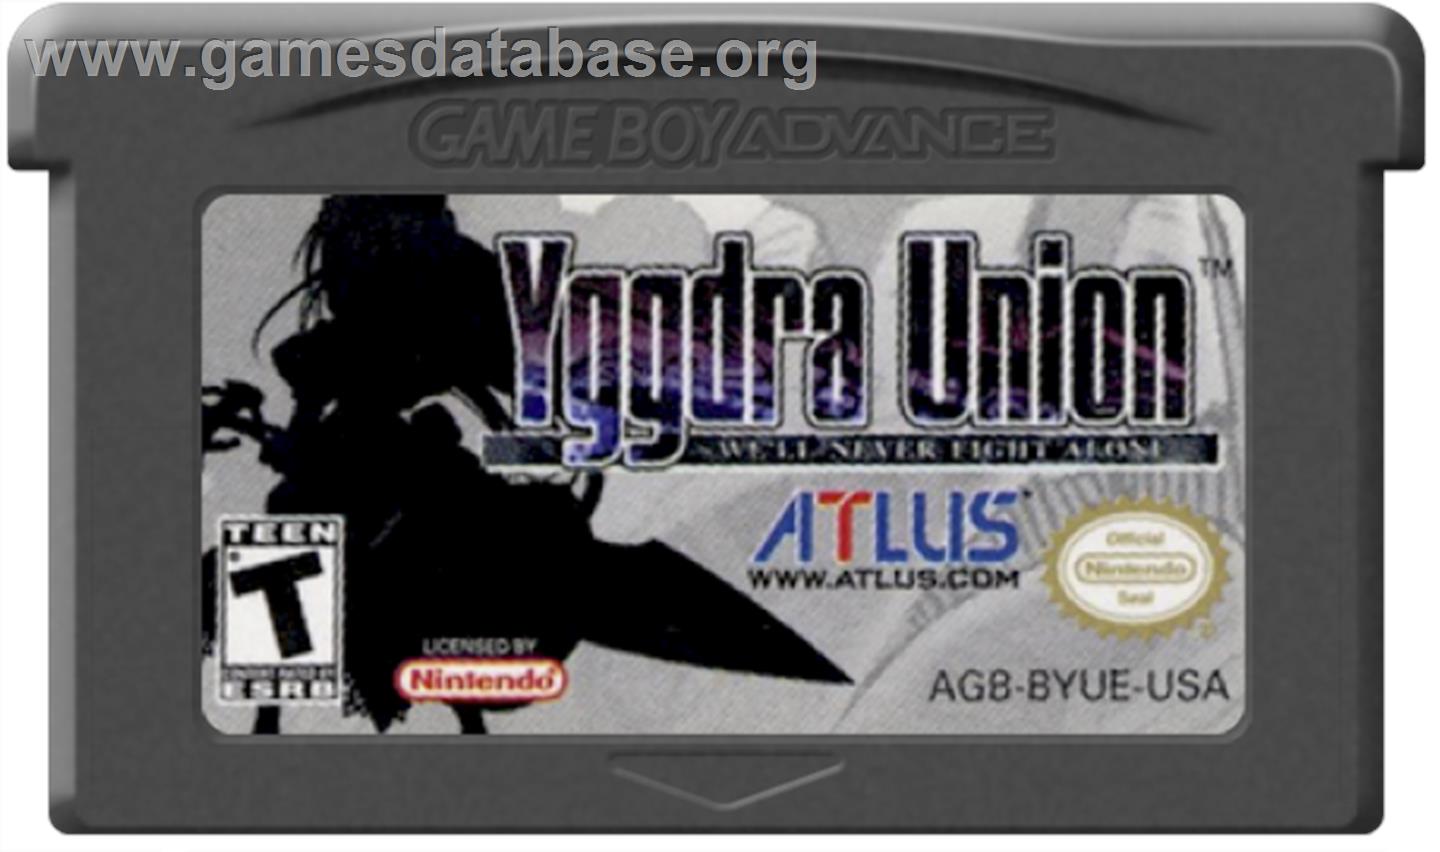 Yggdra Union - Nintendo Game Boy Advance - Artwork - Cartridge